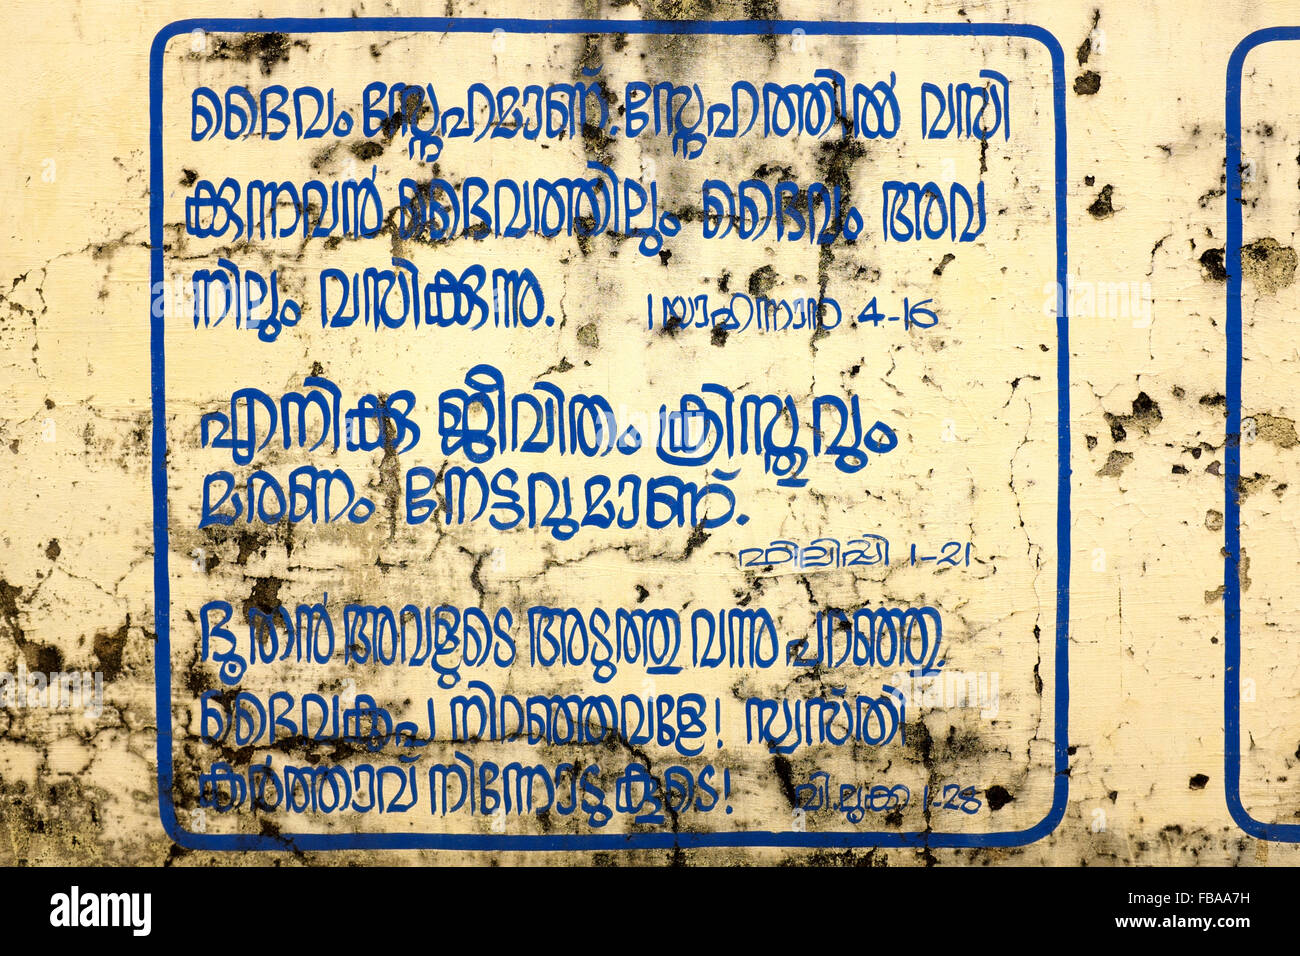 Malayalam Language High Resolution Stock Photography And Images Alamy